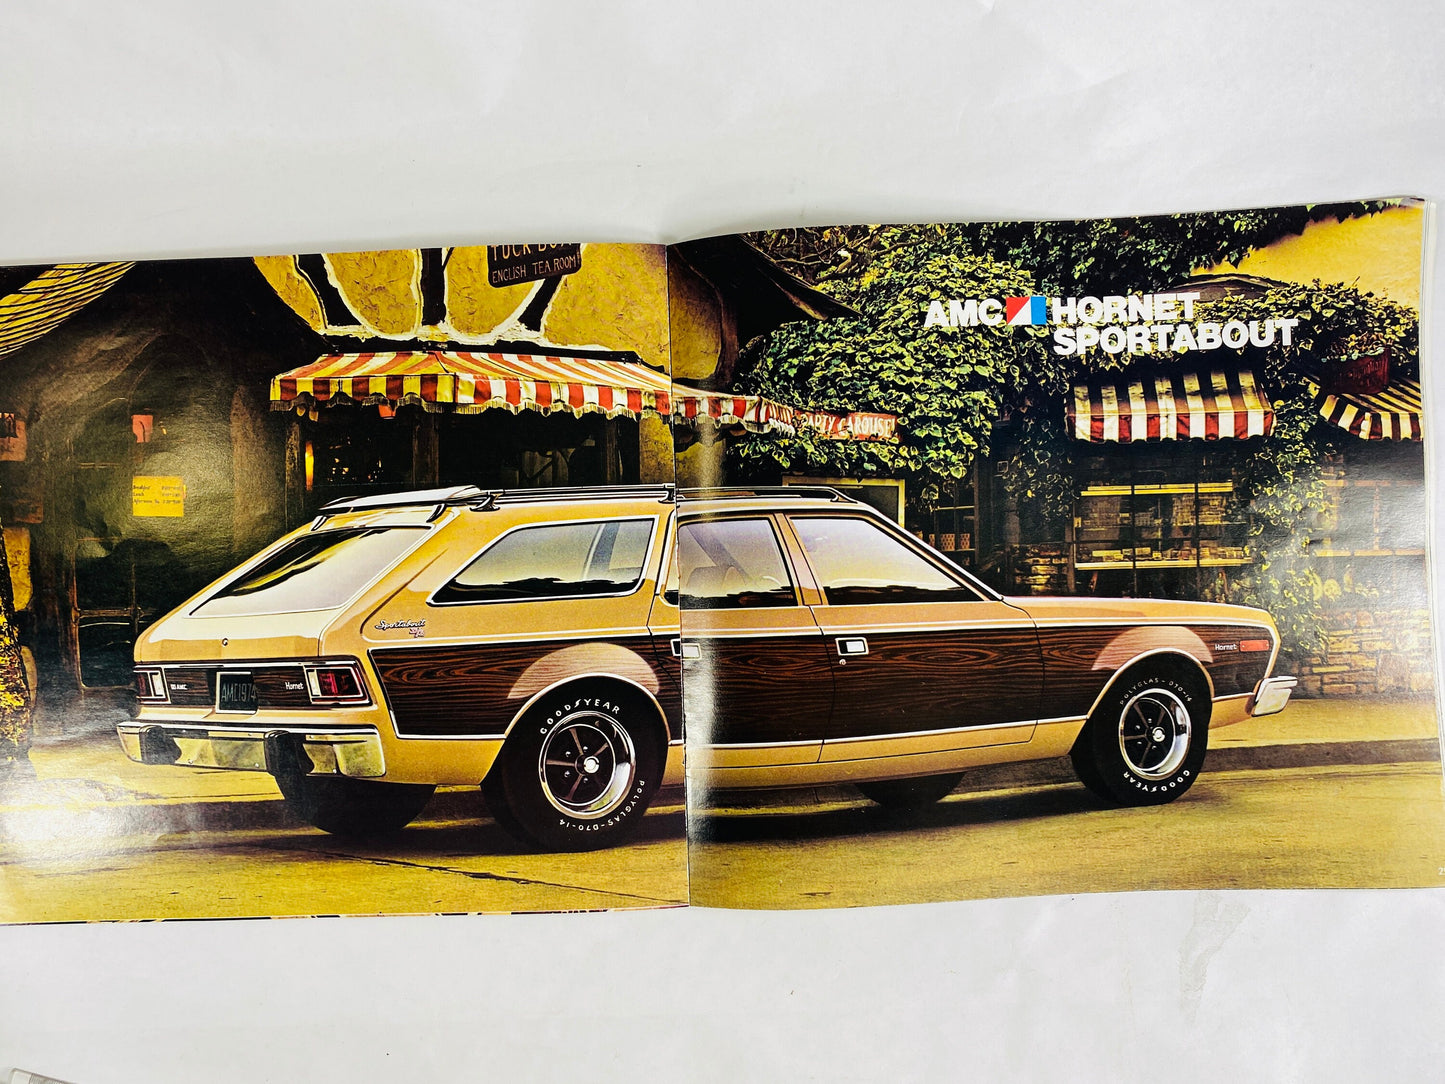 1974 AMC Dealer Showroom Sales Brochure Booklet. Vintage car advertising collectible. Original Catalog Matador Hornet